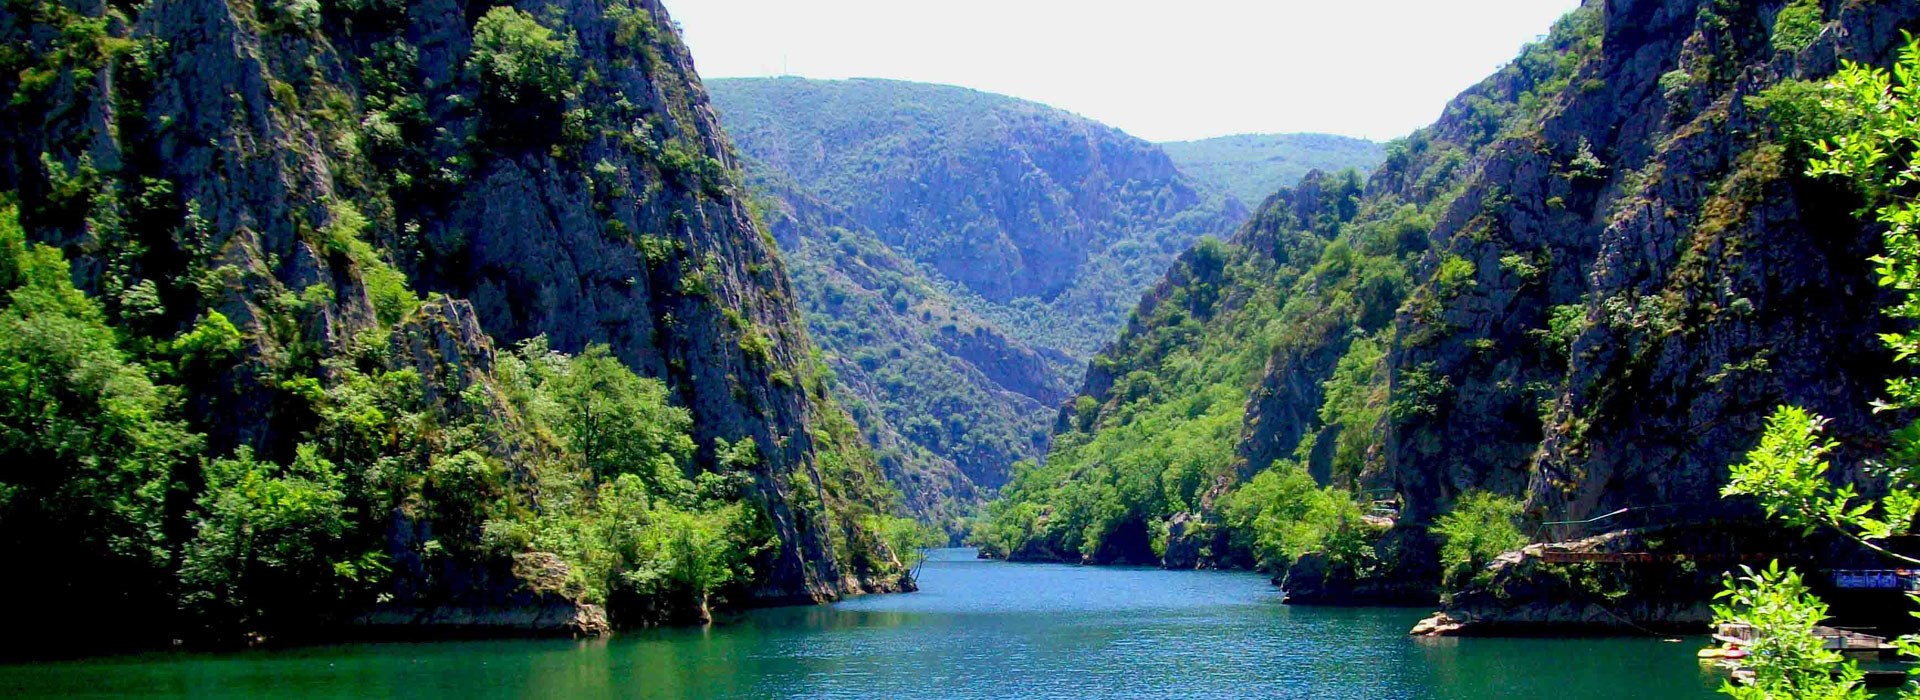 Visiter Le Canyon de Matka - Macédoine du Nord